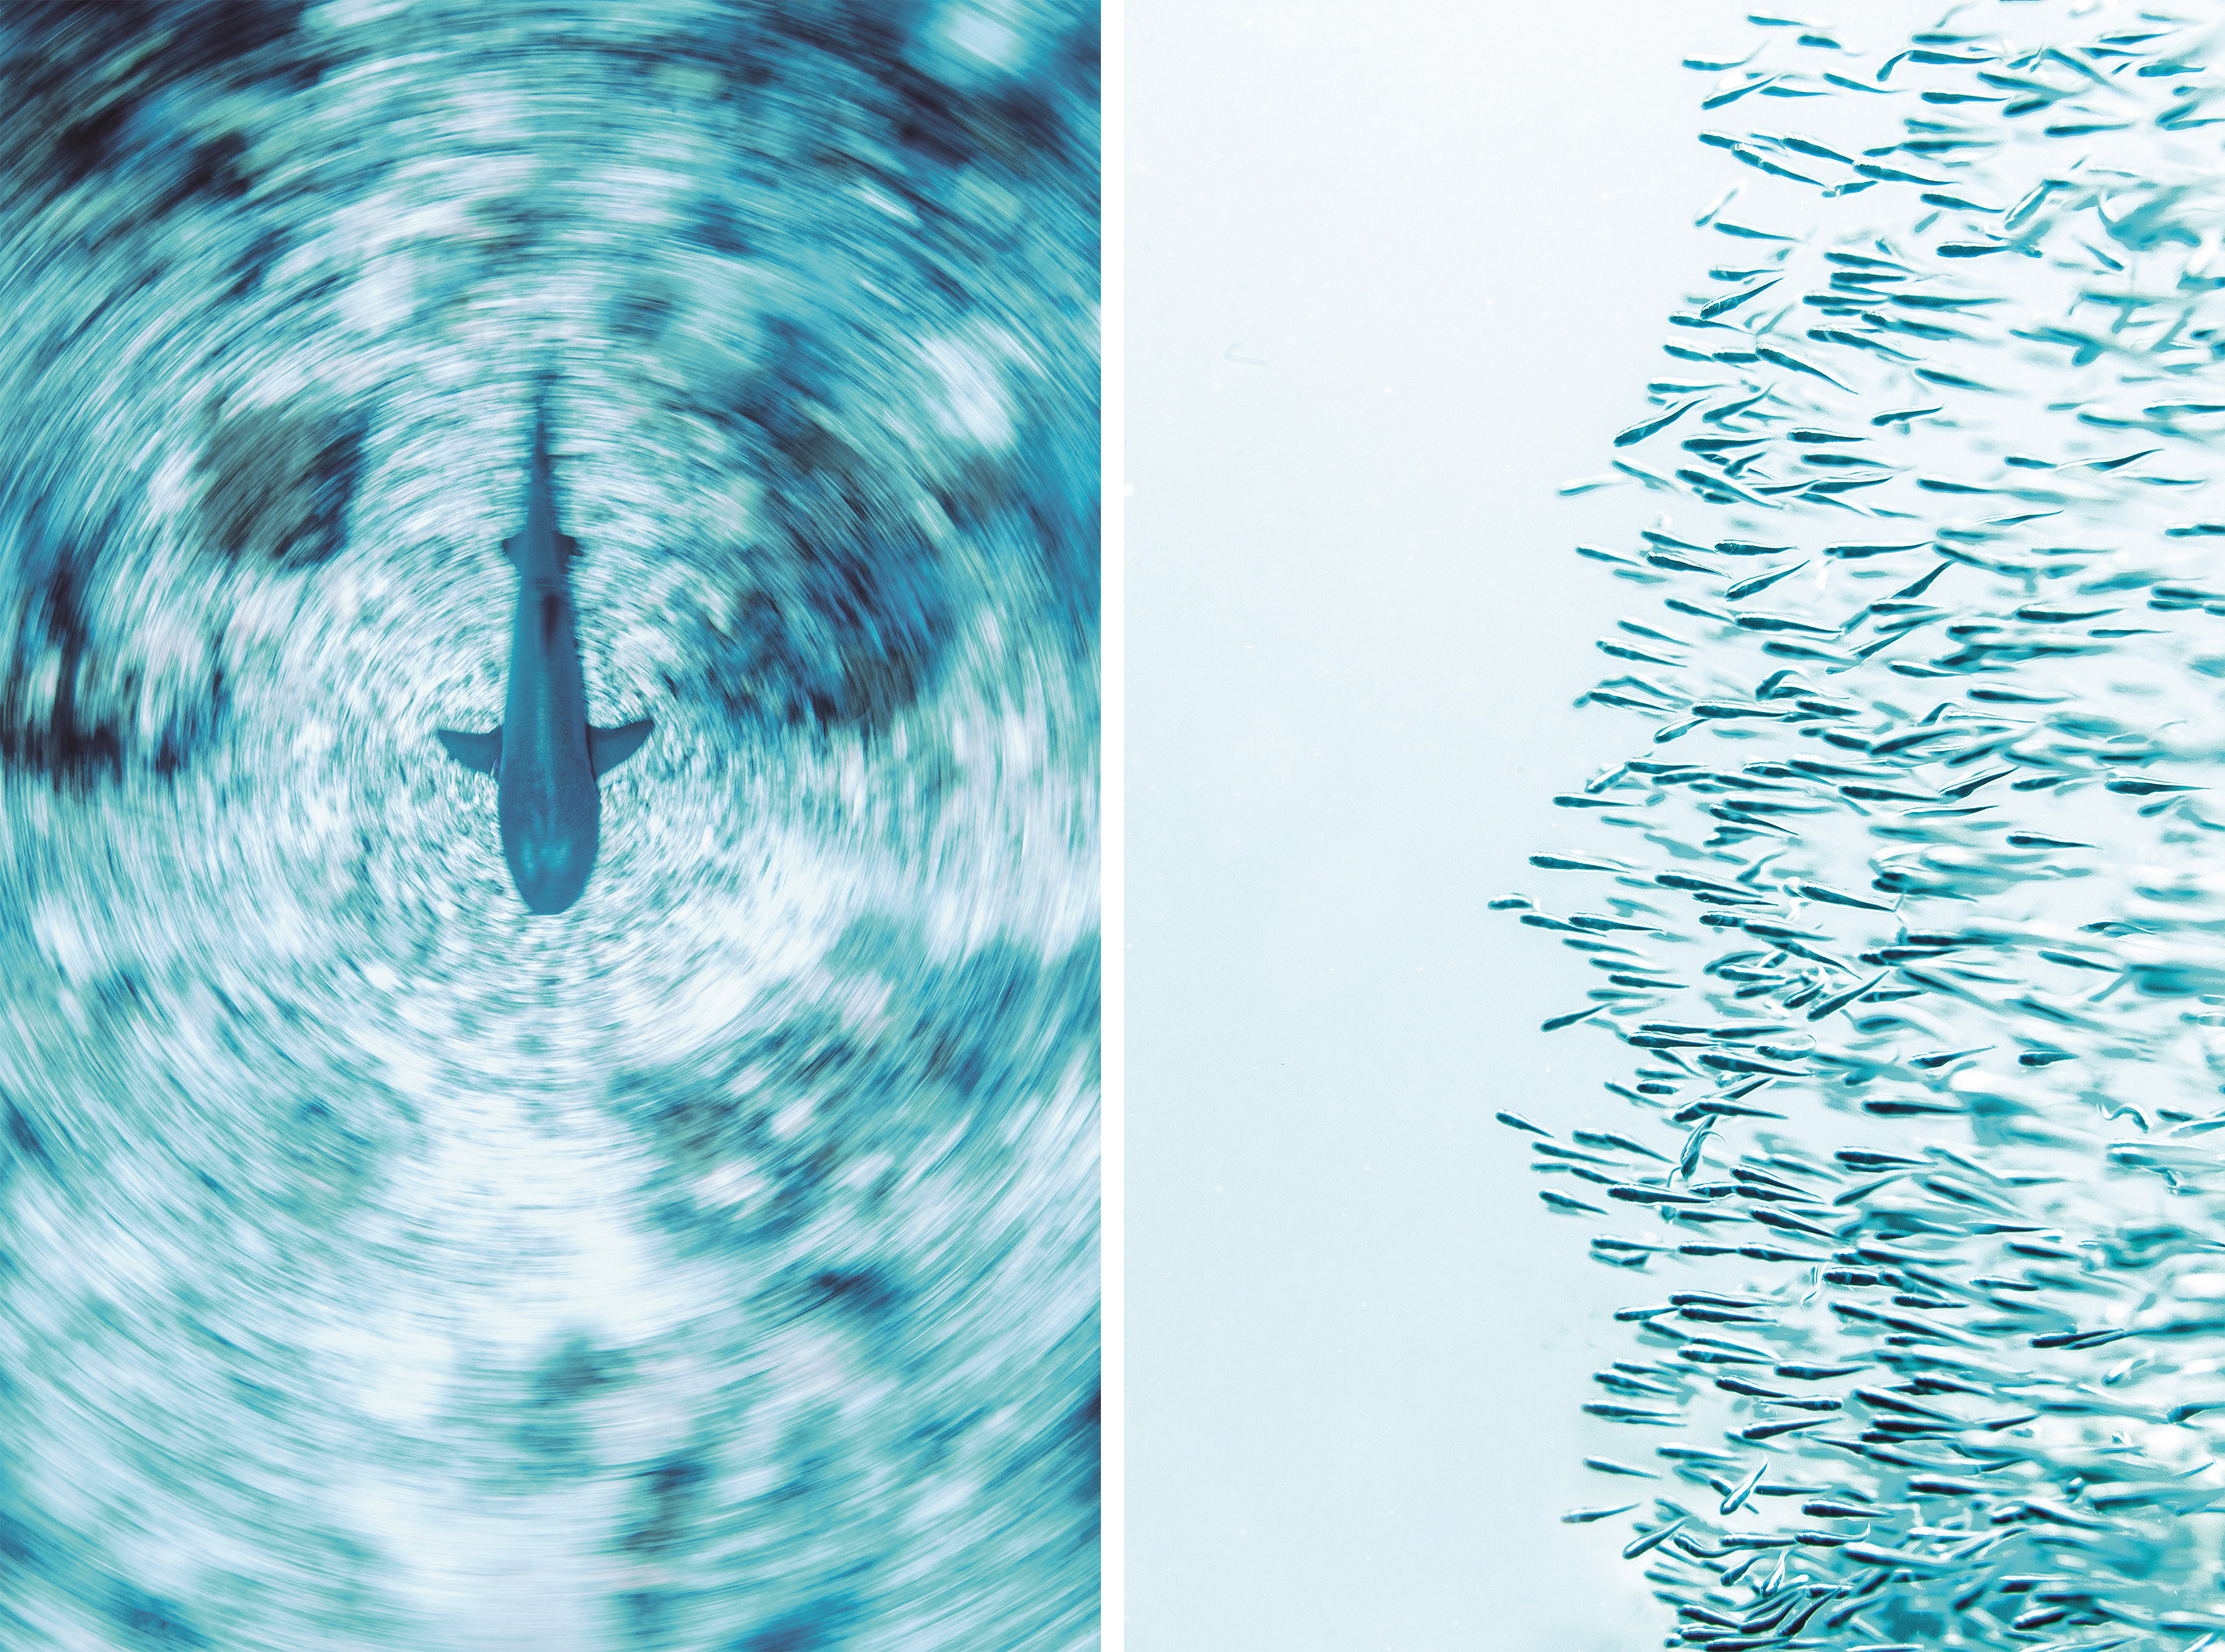 Left: a shark; right: a school of tiny fish